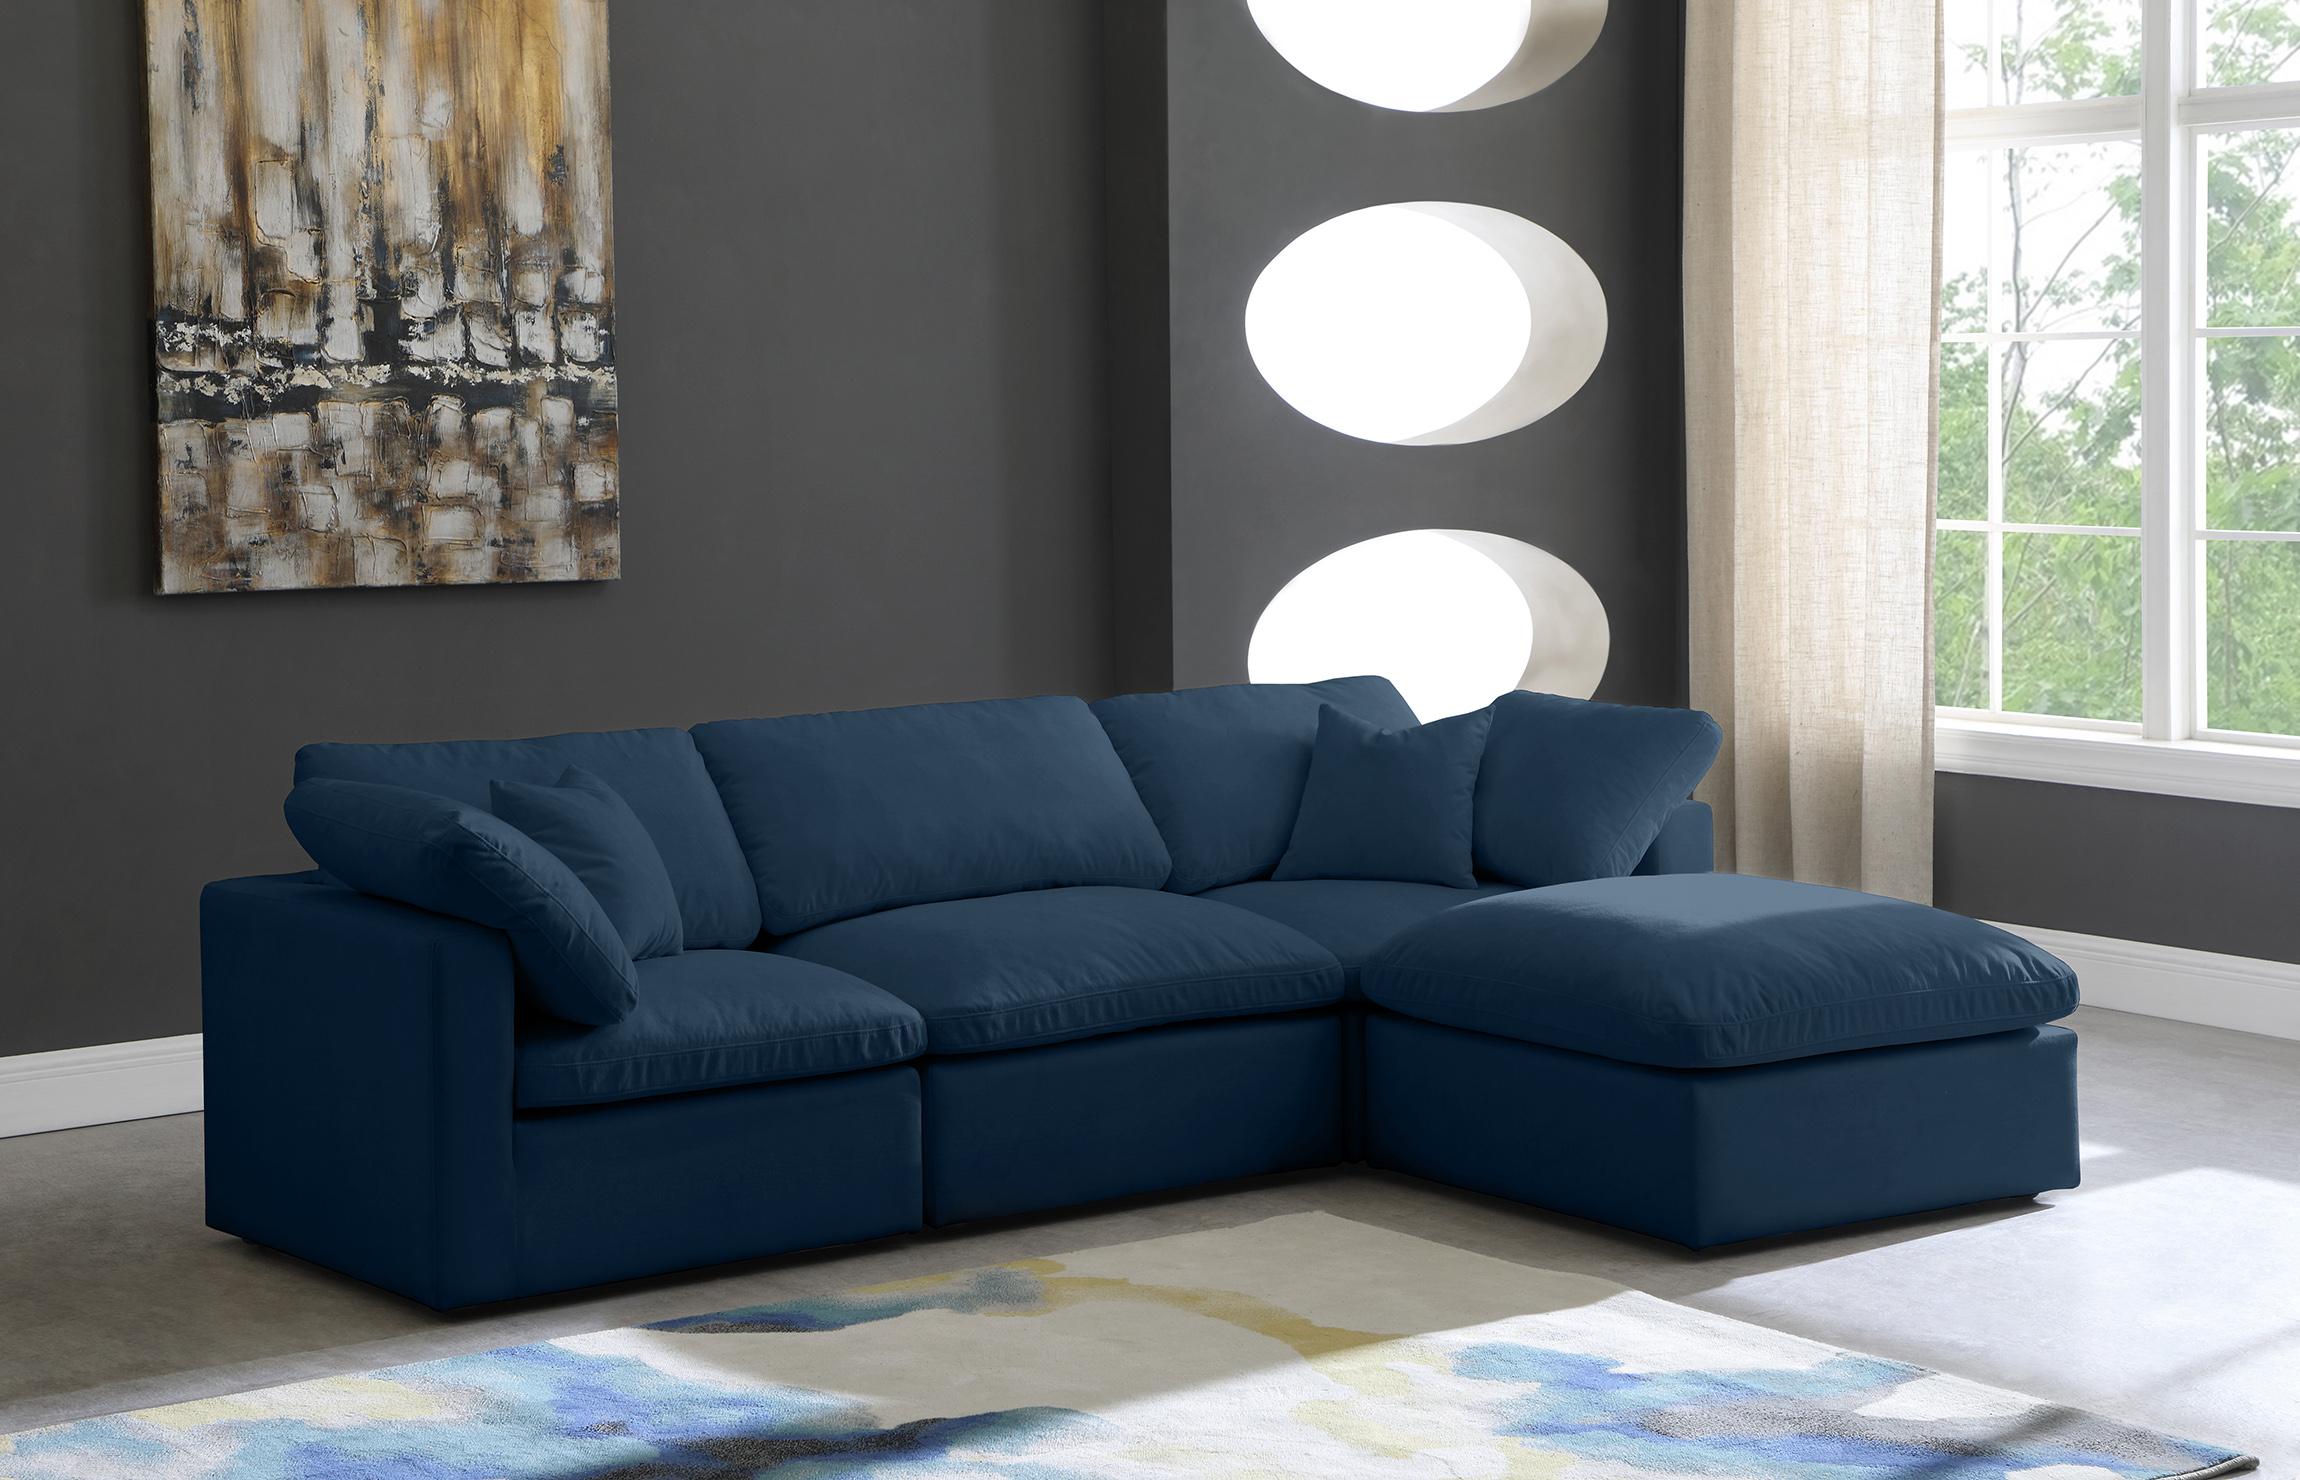 

    
Meridian Furniture 602Navy-Sec4A Sectional Sofa Navy 602Navy-Sec4A
